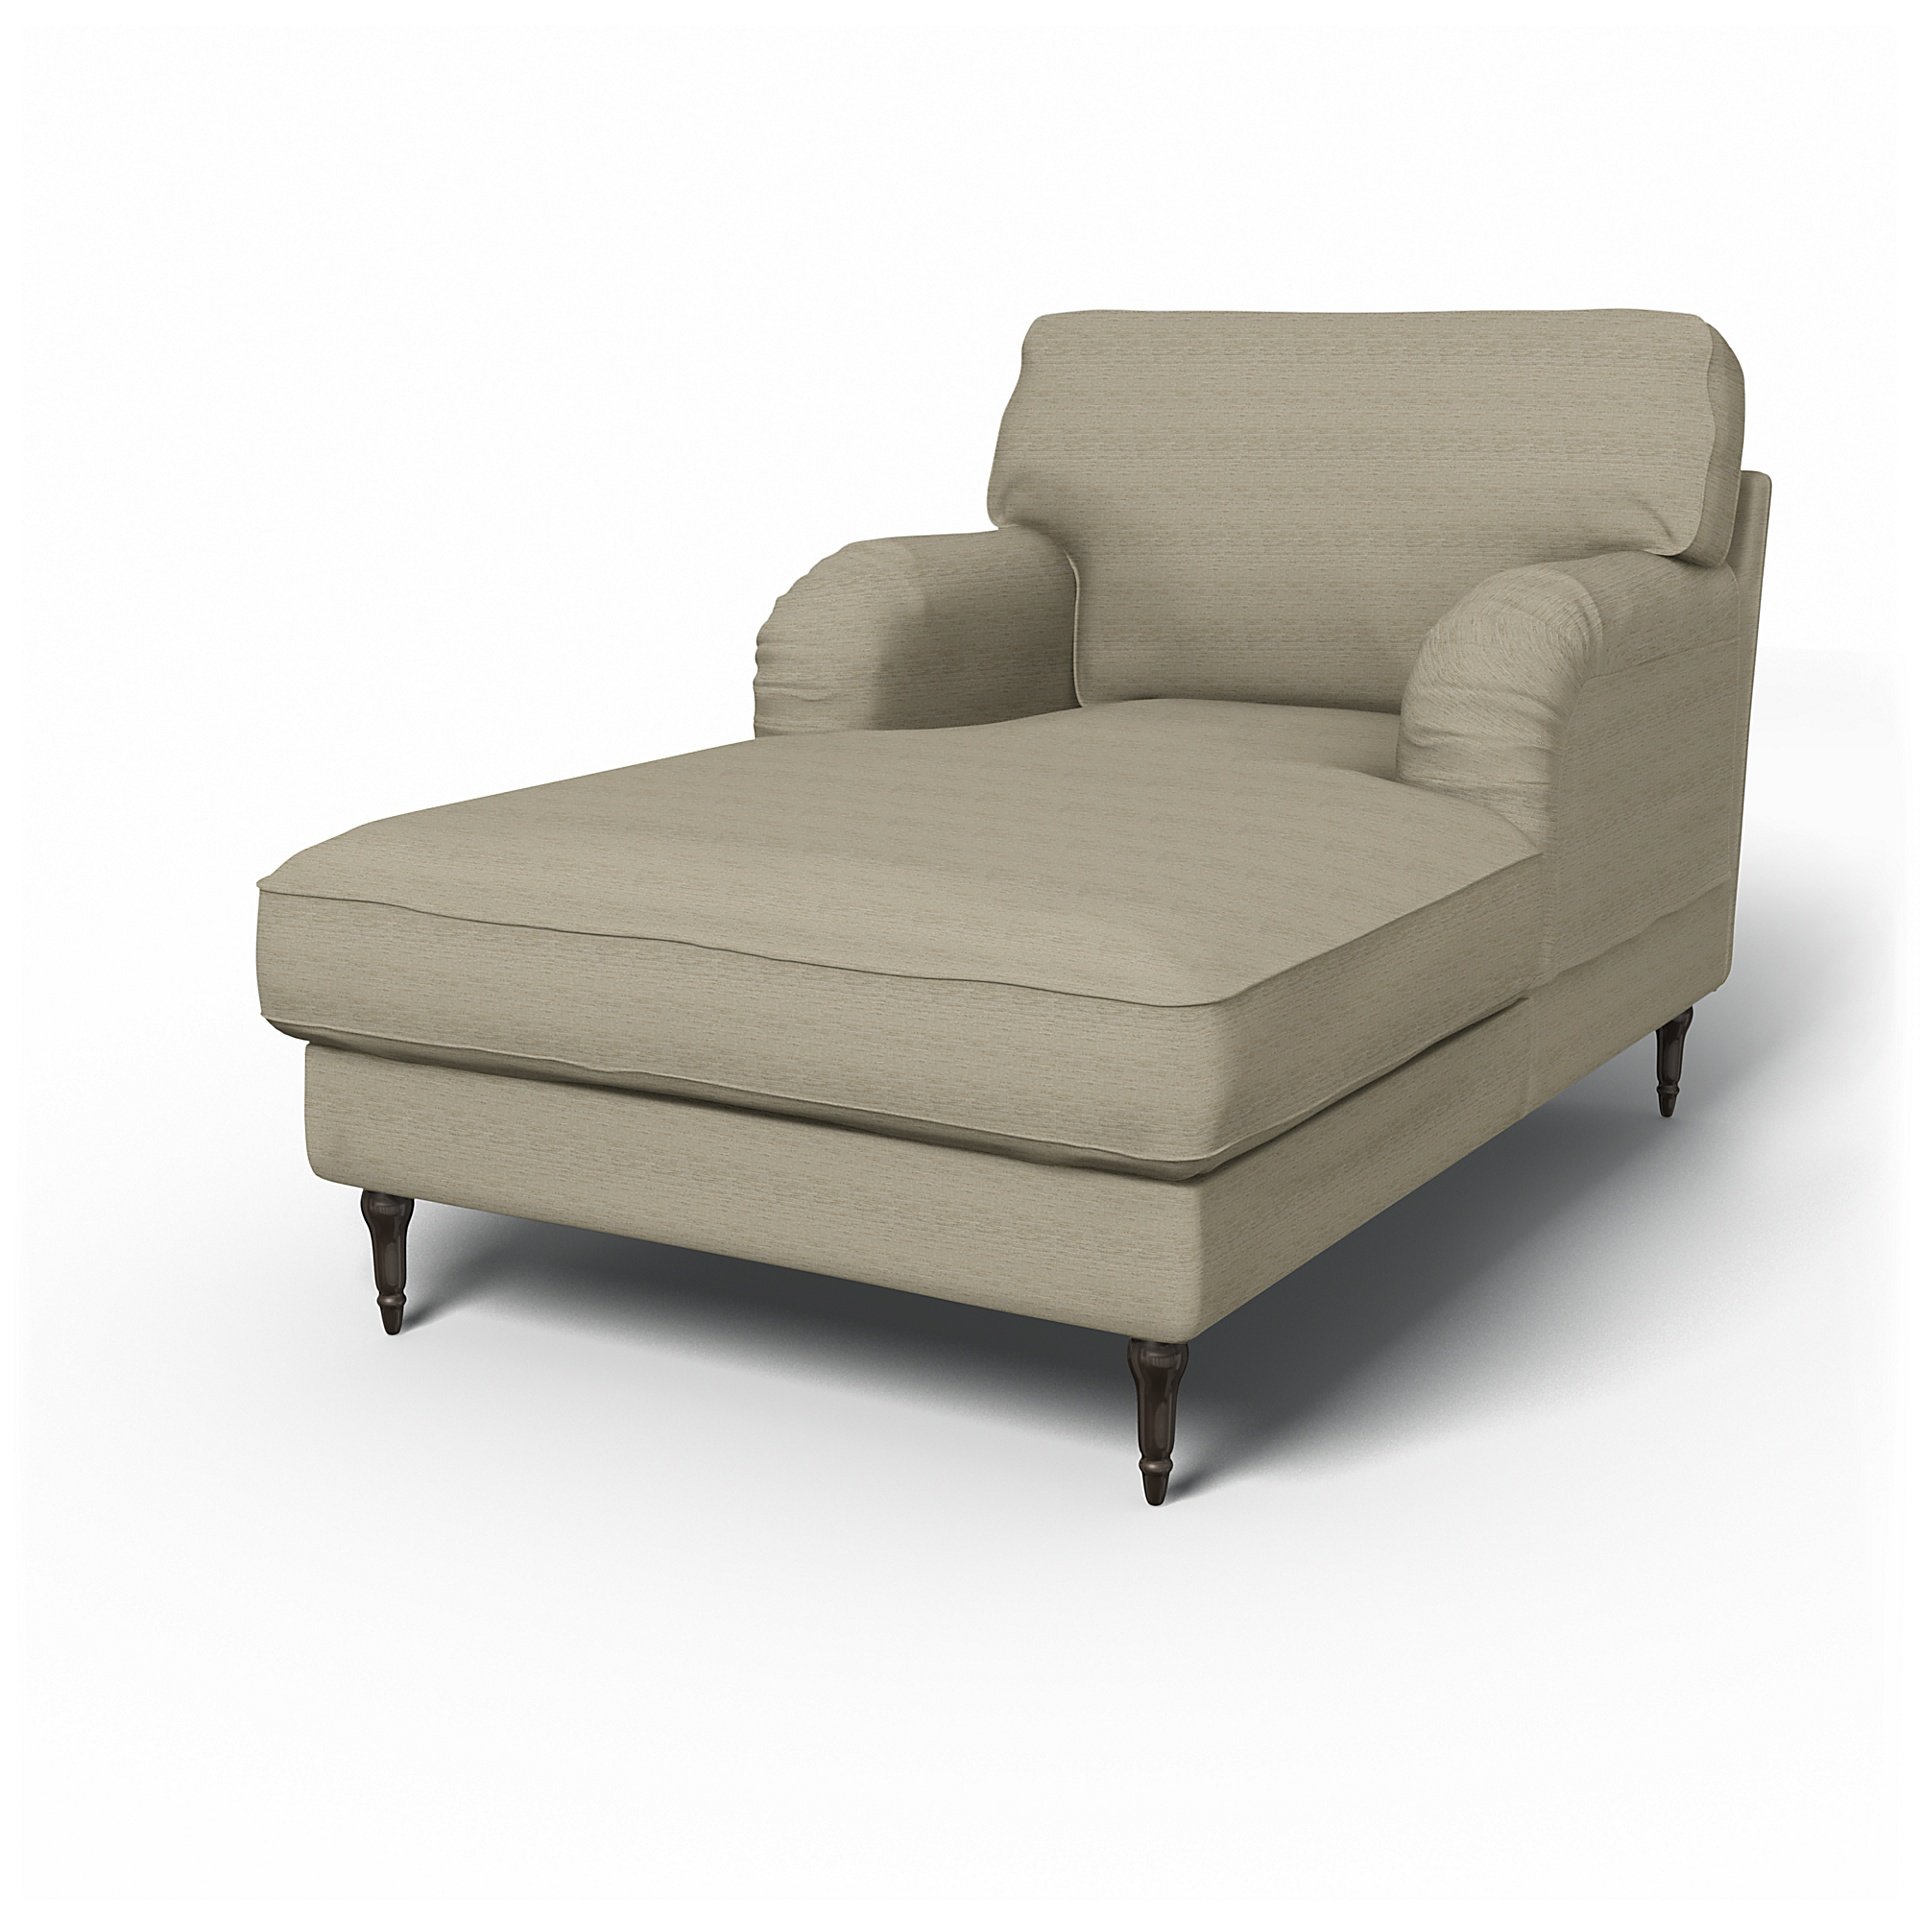 IKEA - Stocksund Chaise Longue Cover, Light Sand, Boucle & Texture - Bemz